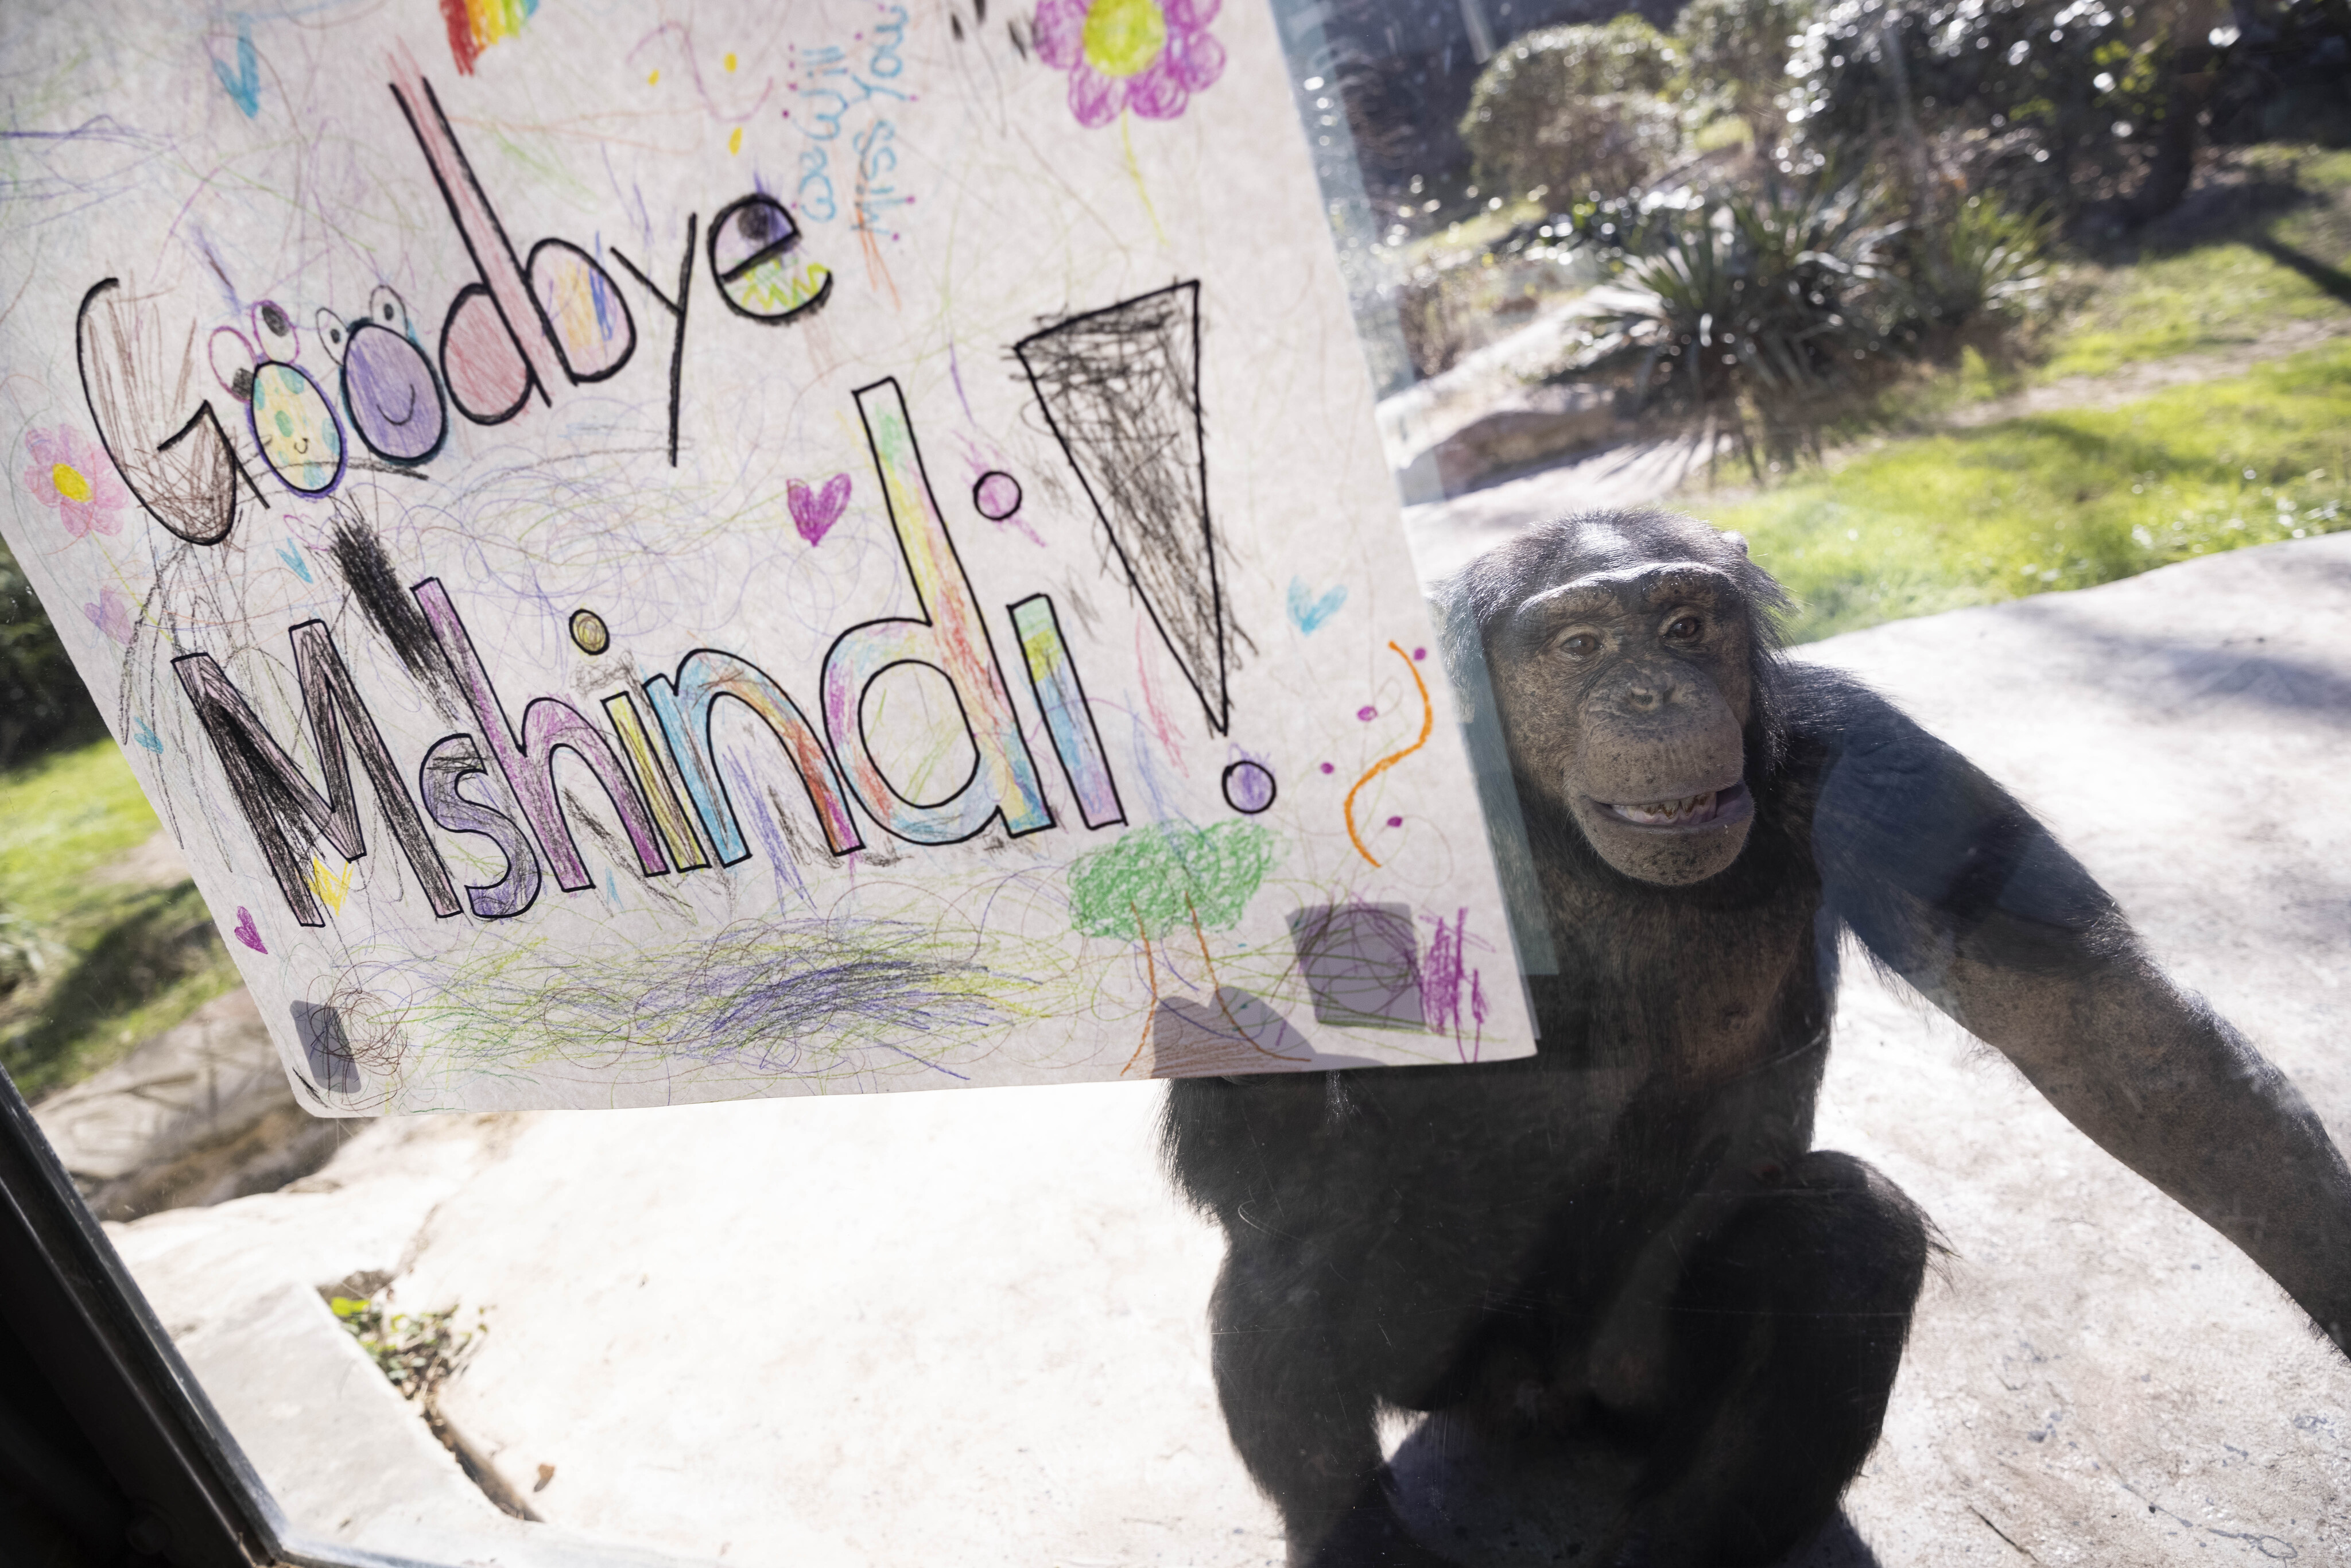 Monkey business: Dallas Zoo says farewell to chimpanzee in move